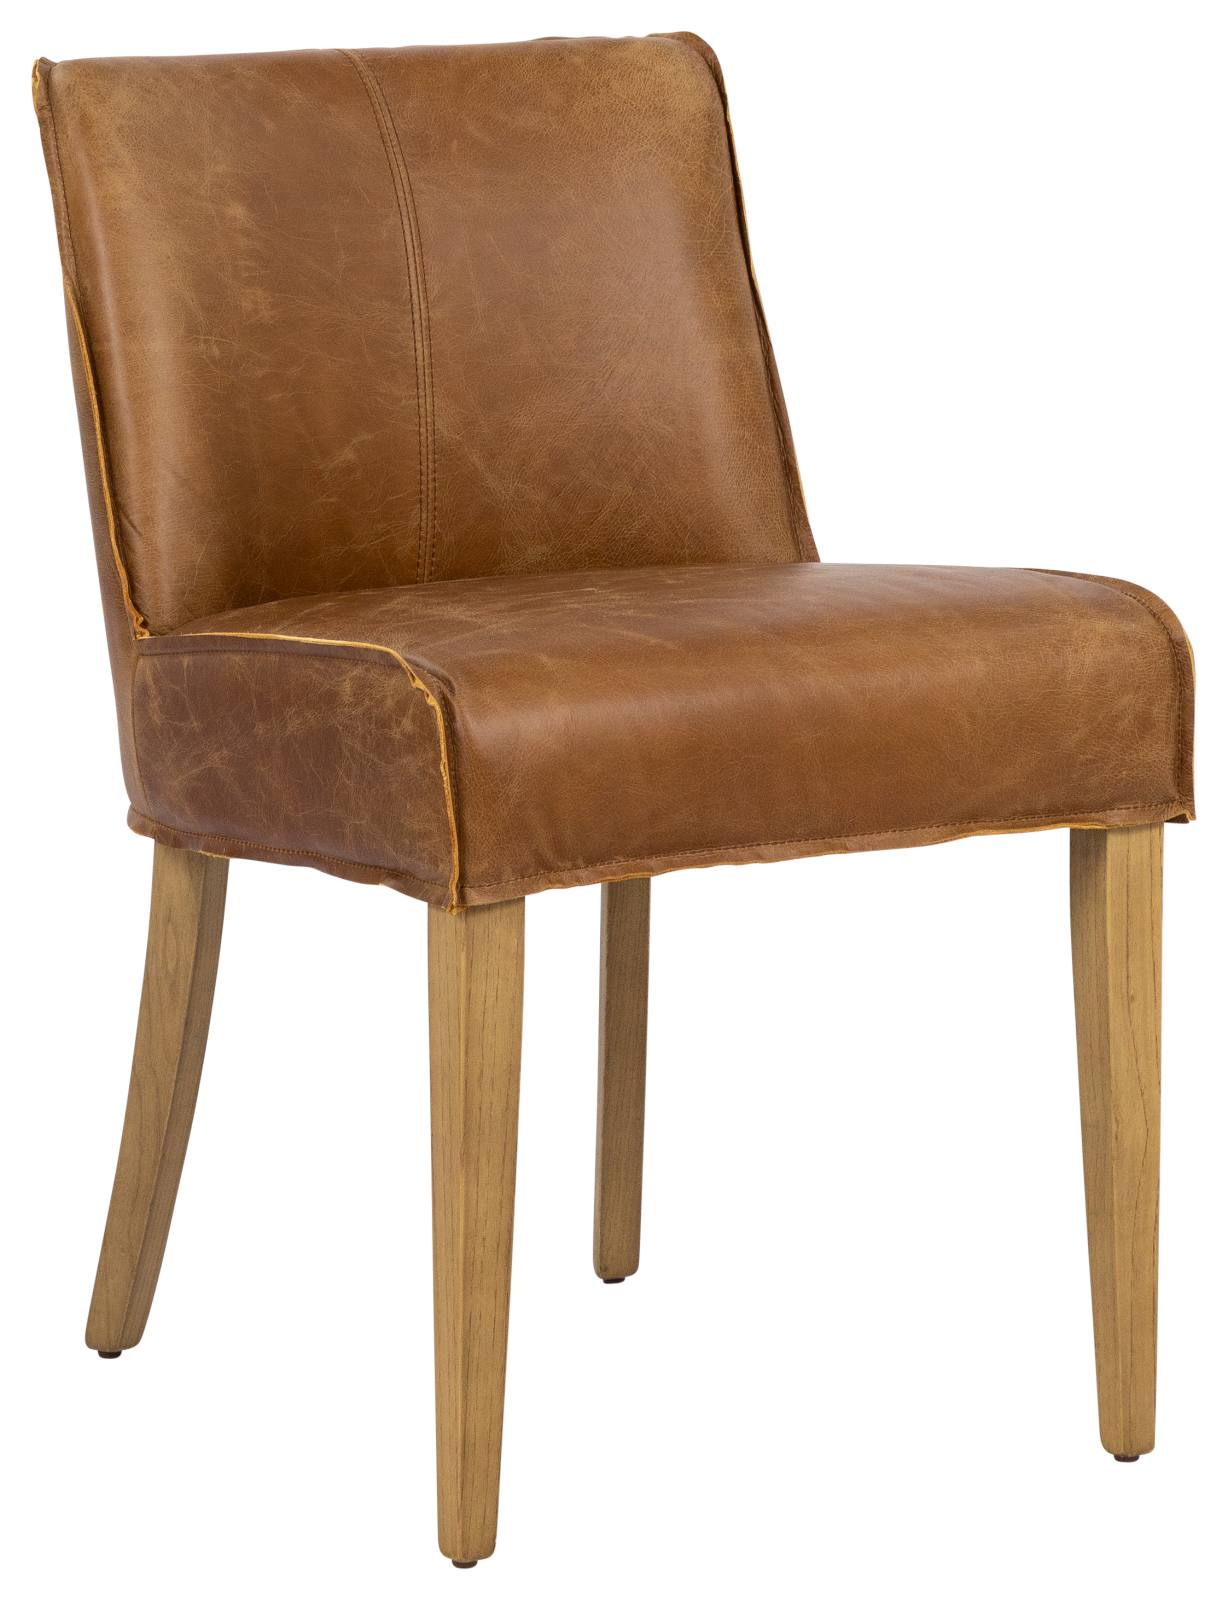 Ambra Leather & Oak Dining Chair, Vintage Saddle